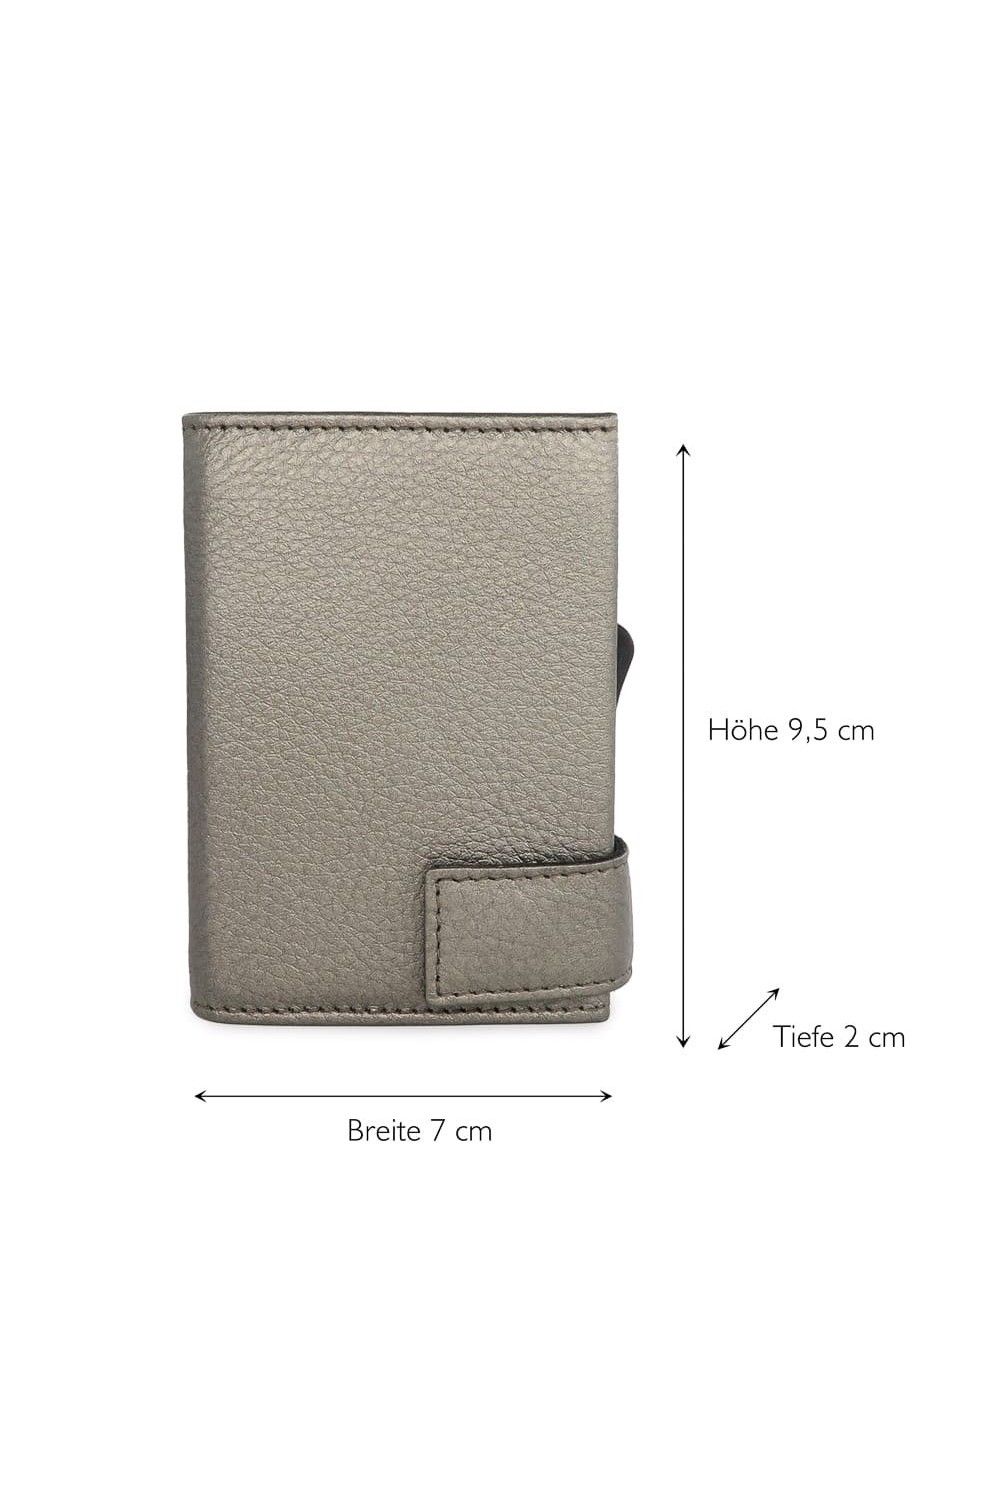 Porte-cartes SecWal DK Leather Metallic gris